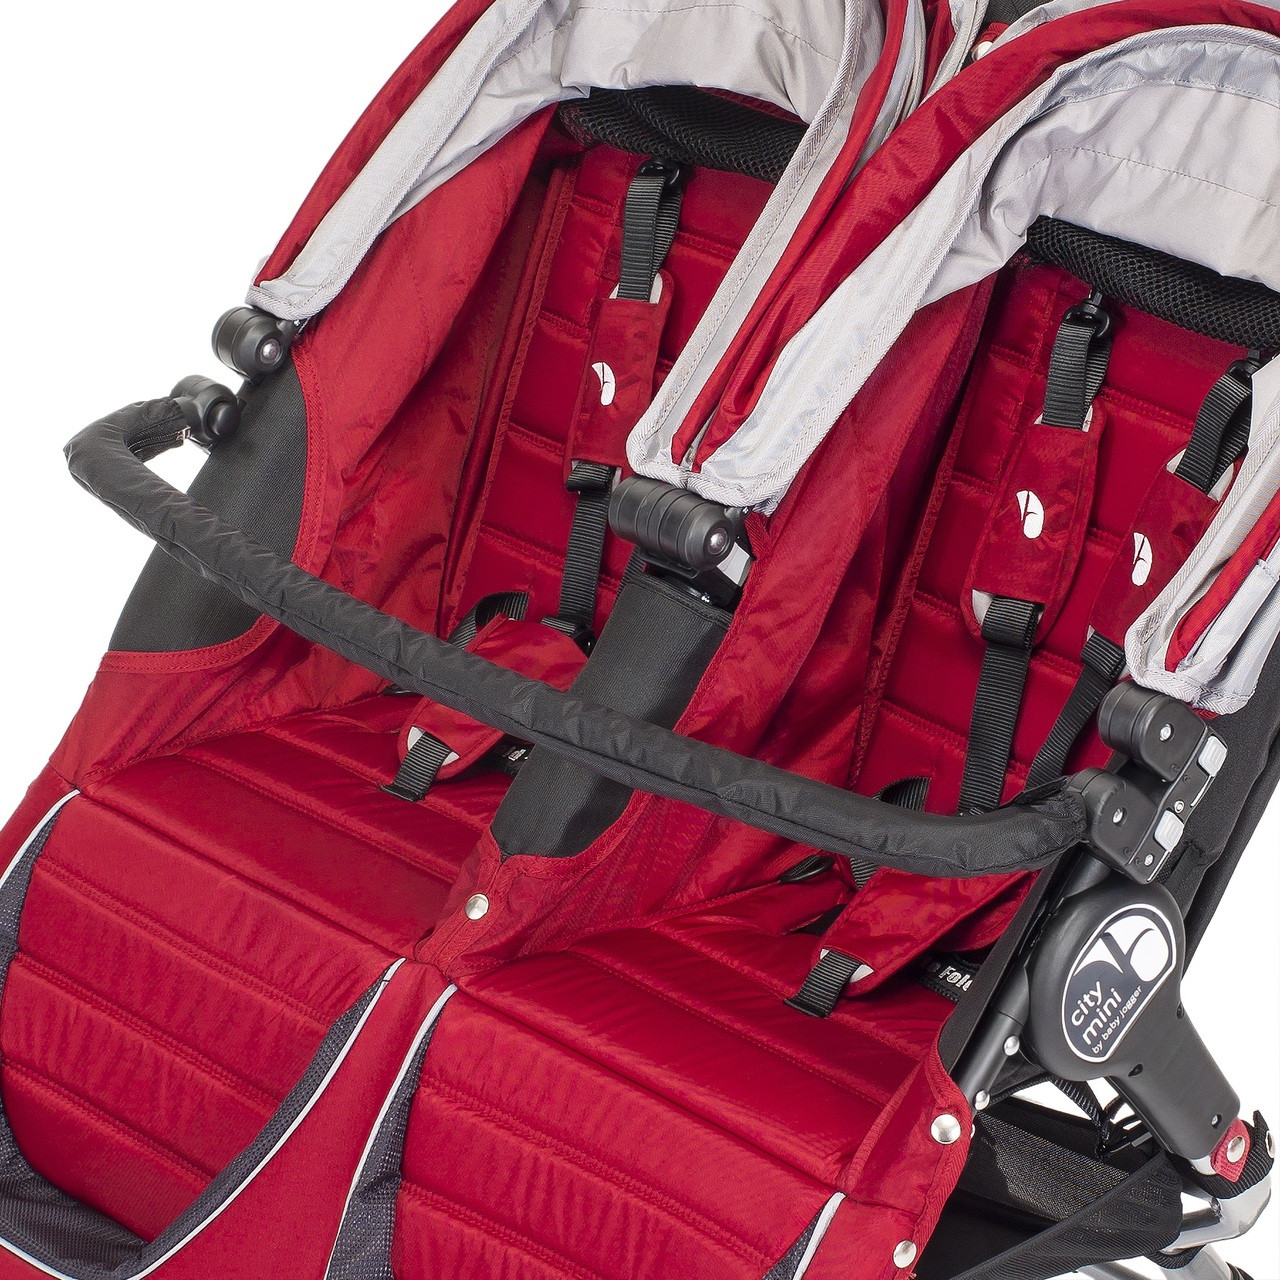 baby jogger double stroller bag